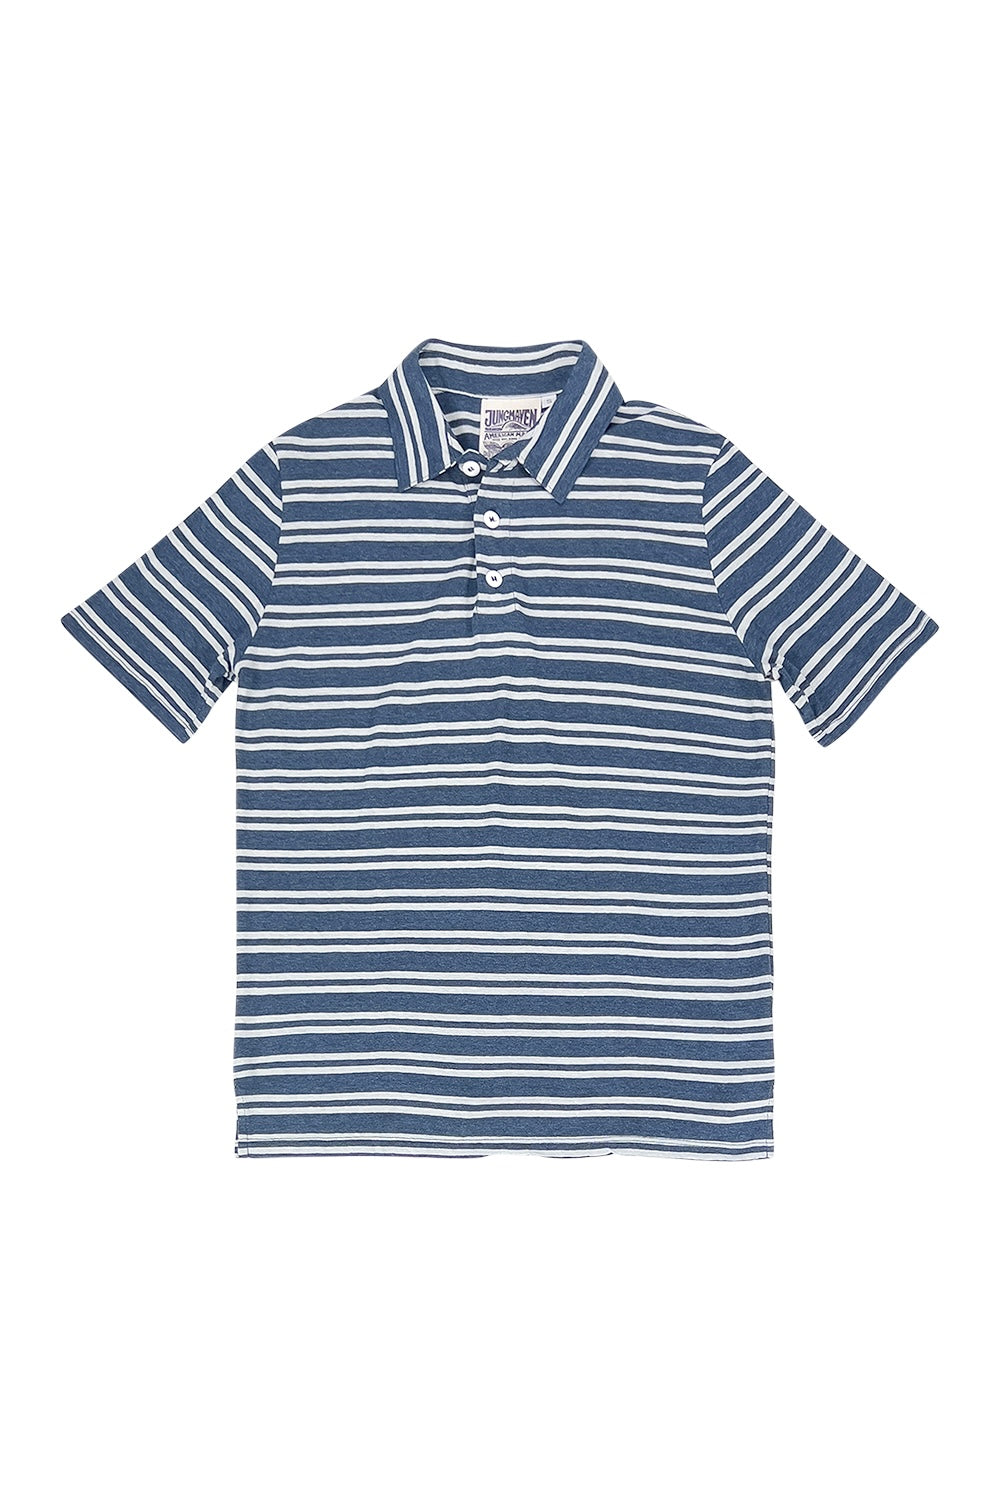 Stripe Camden Polo | Jungmaven Hemp Clothing & Accessories / Color: Blue/White Stripe